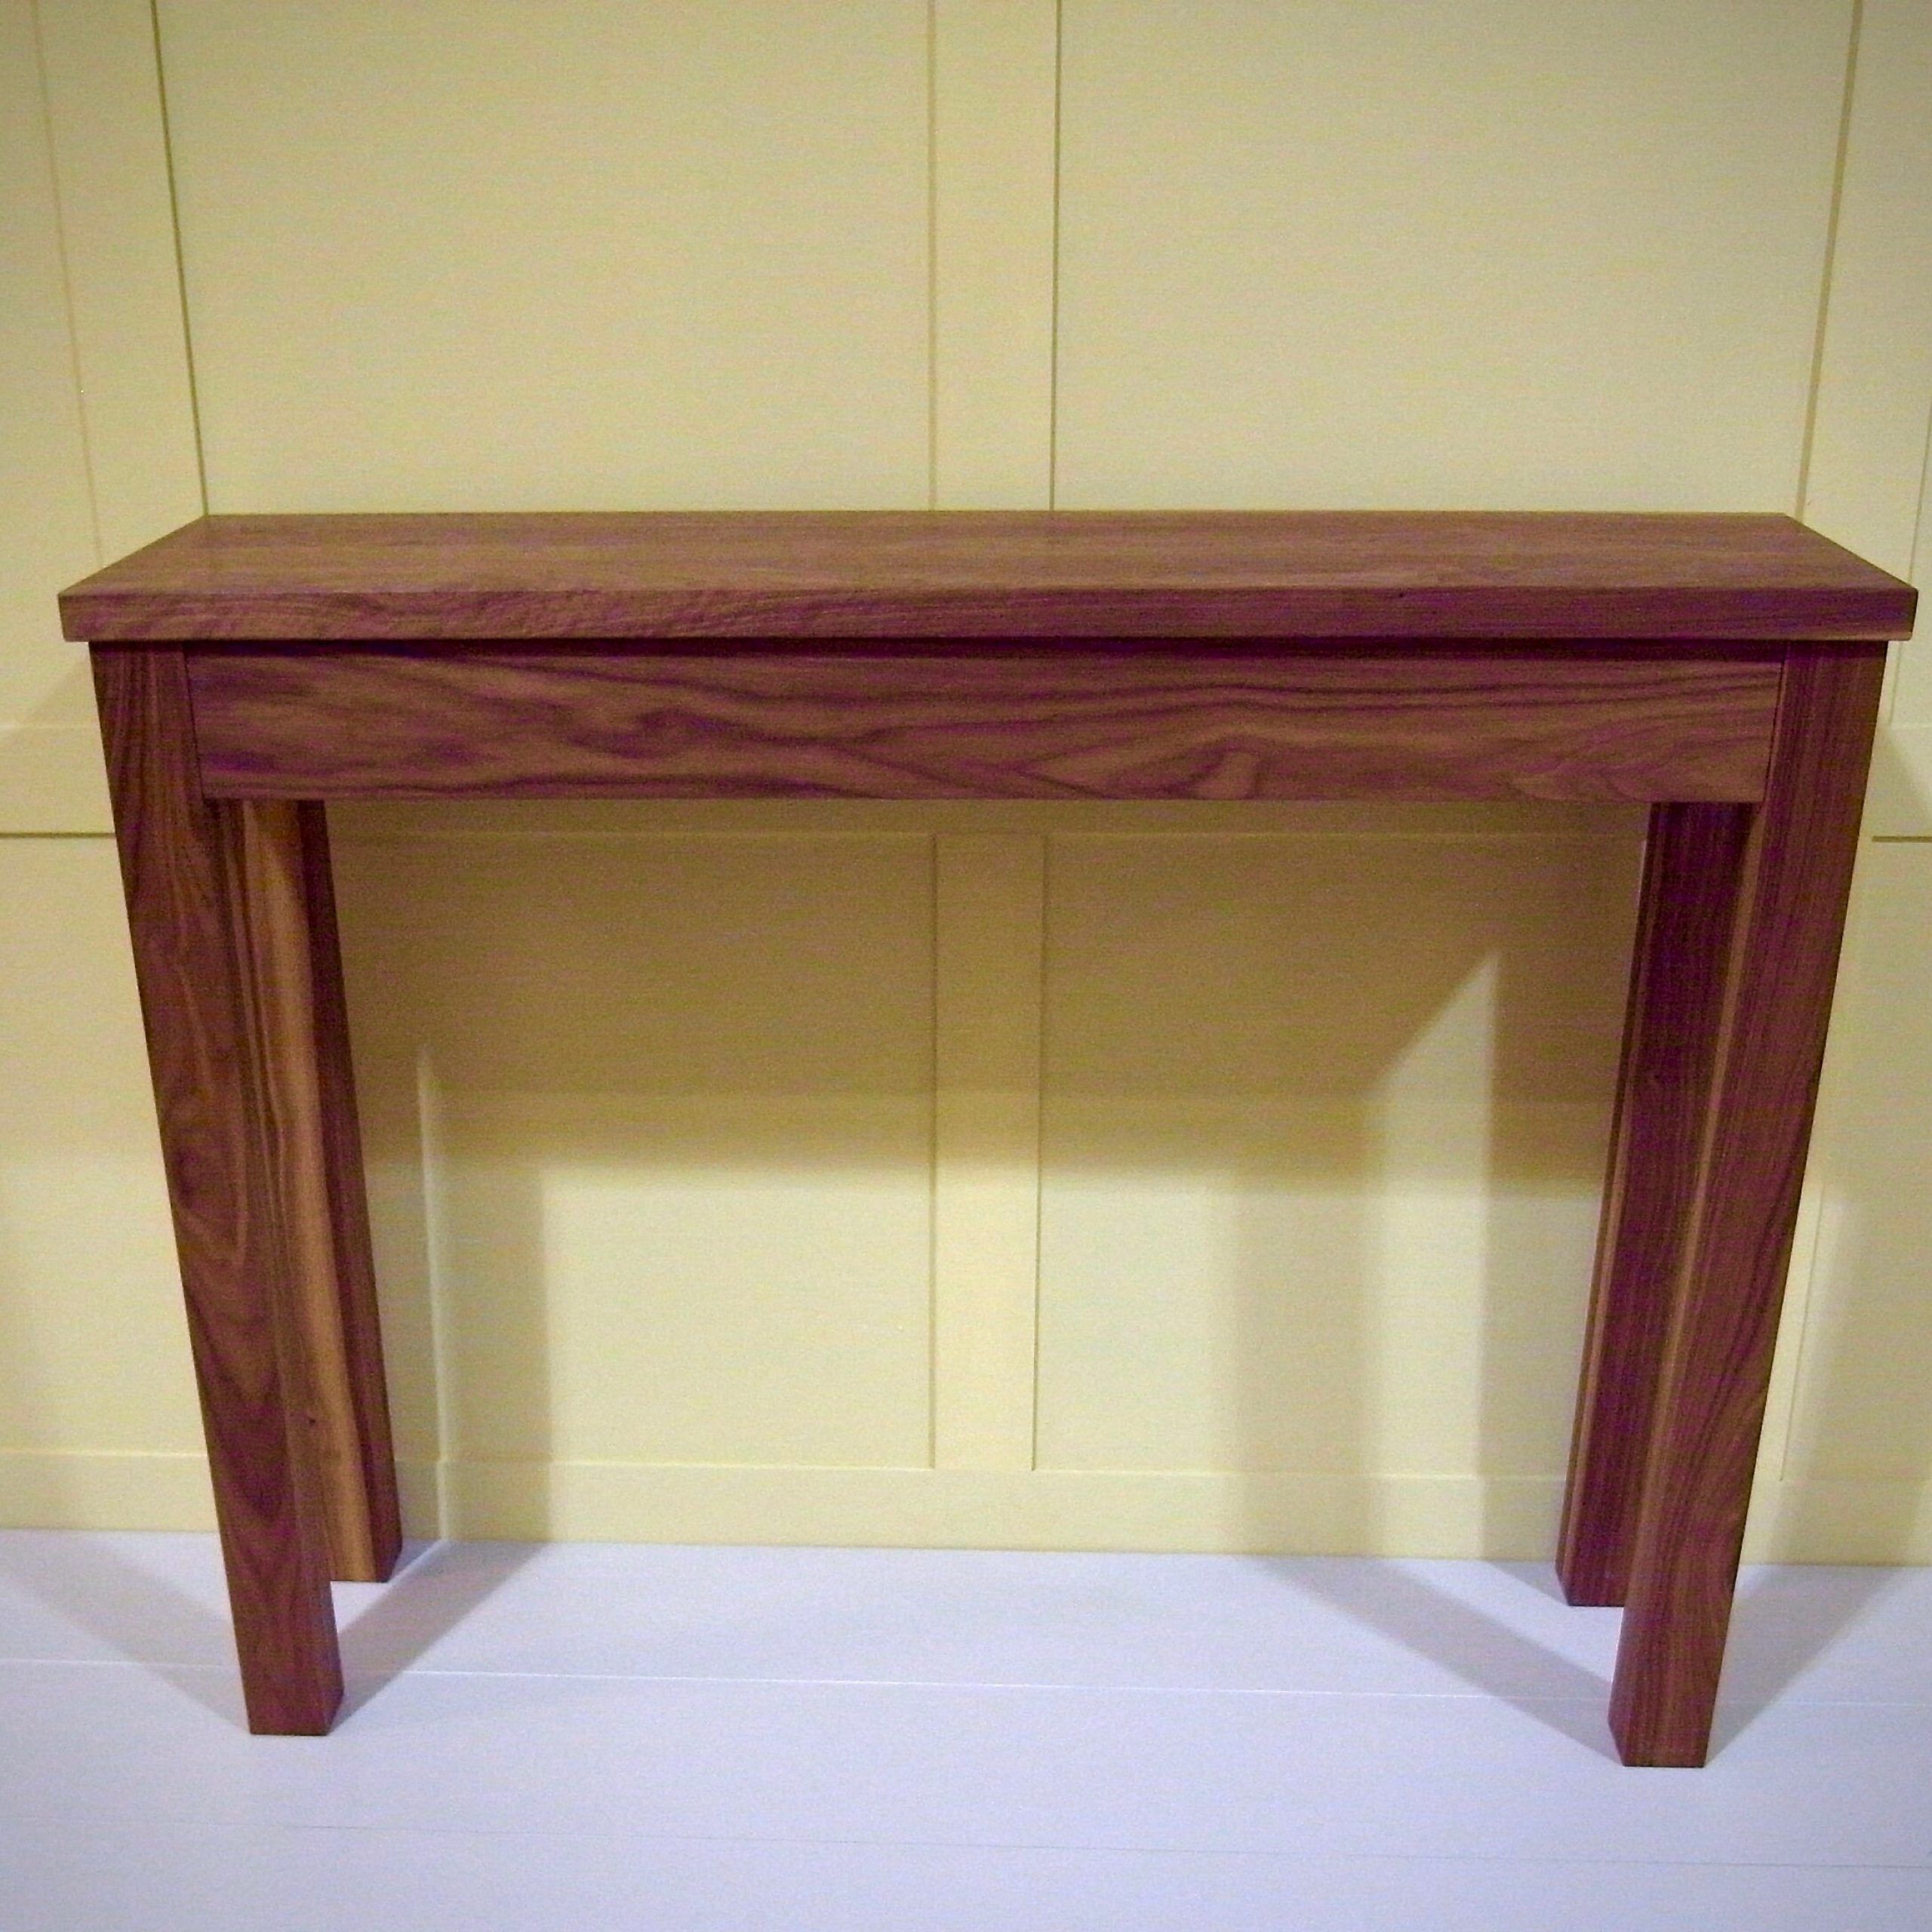 Hallway Console Table In Dark Solid Walnut Wood Within Dark Walnut Console Tables (View 14 of 20)